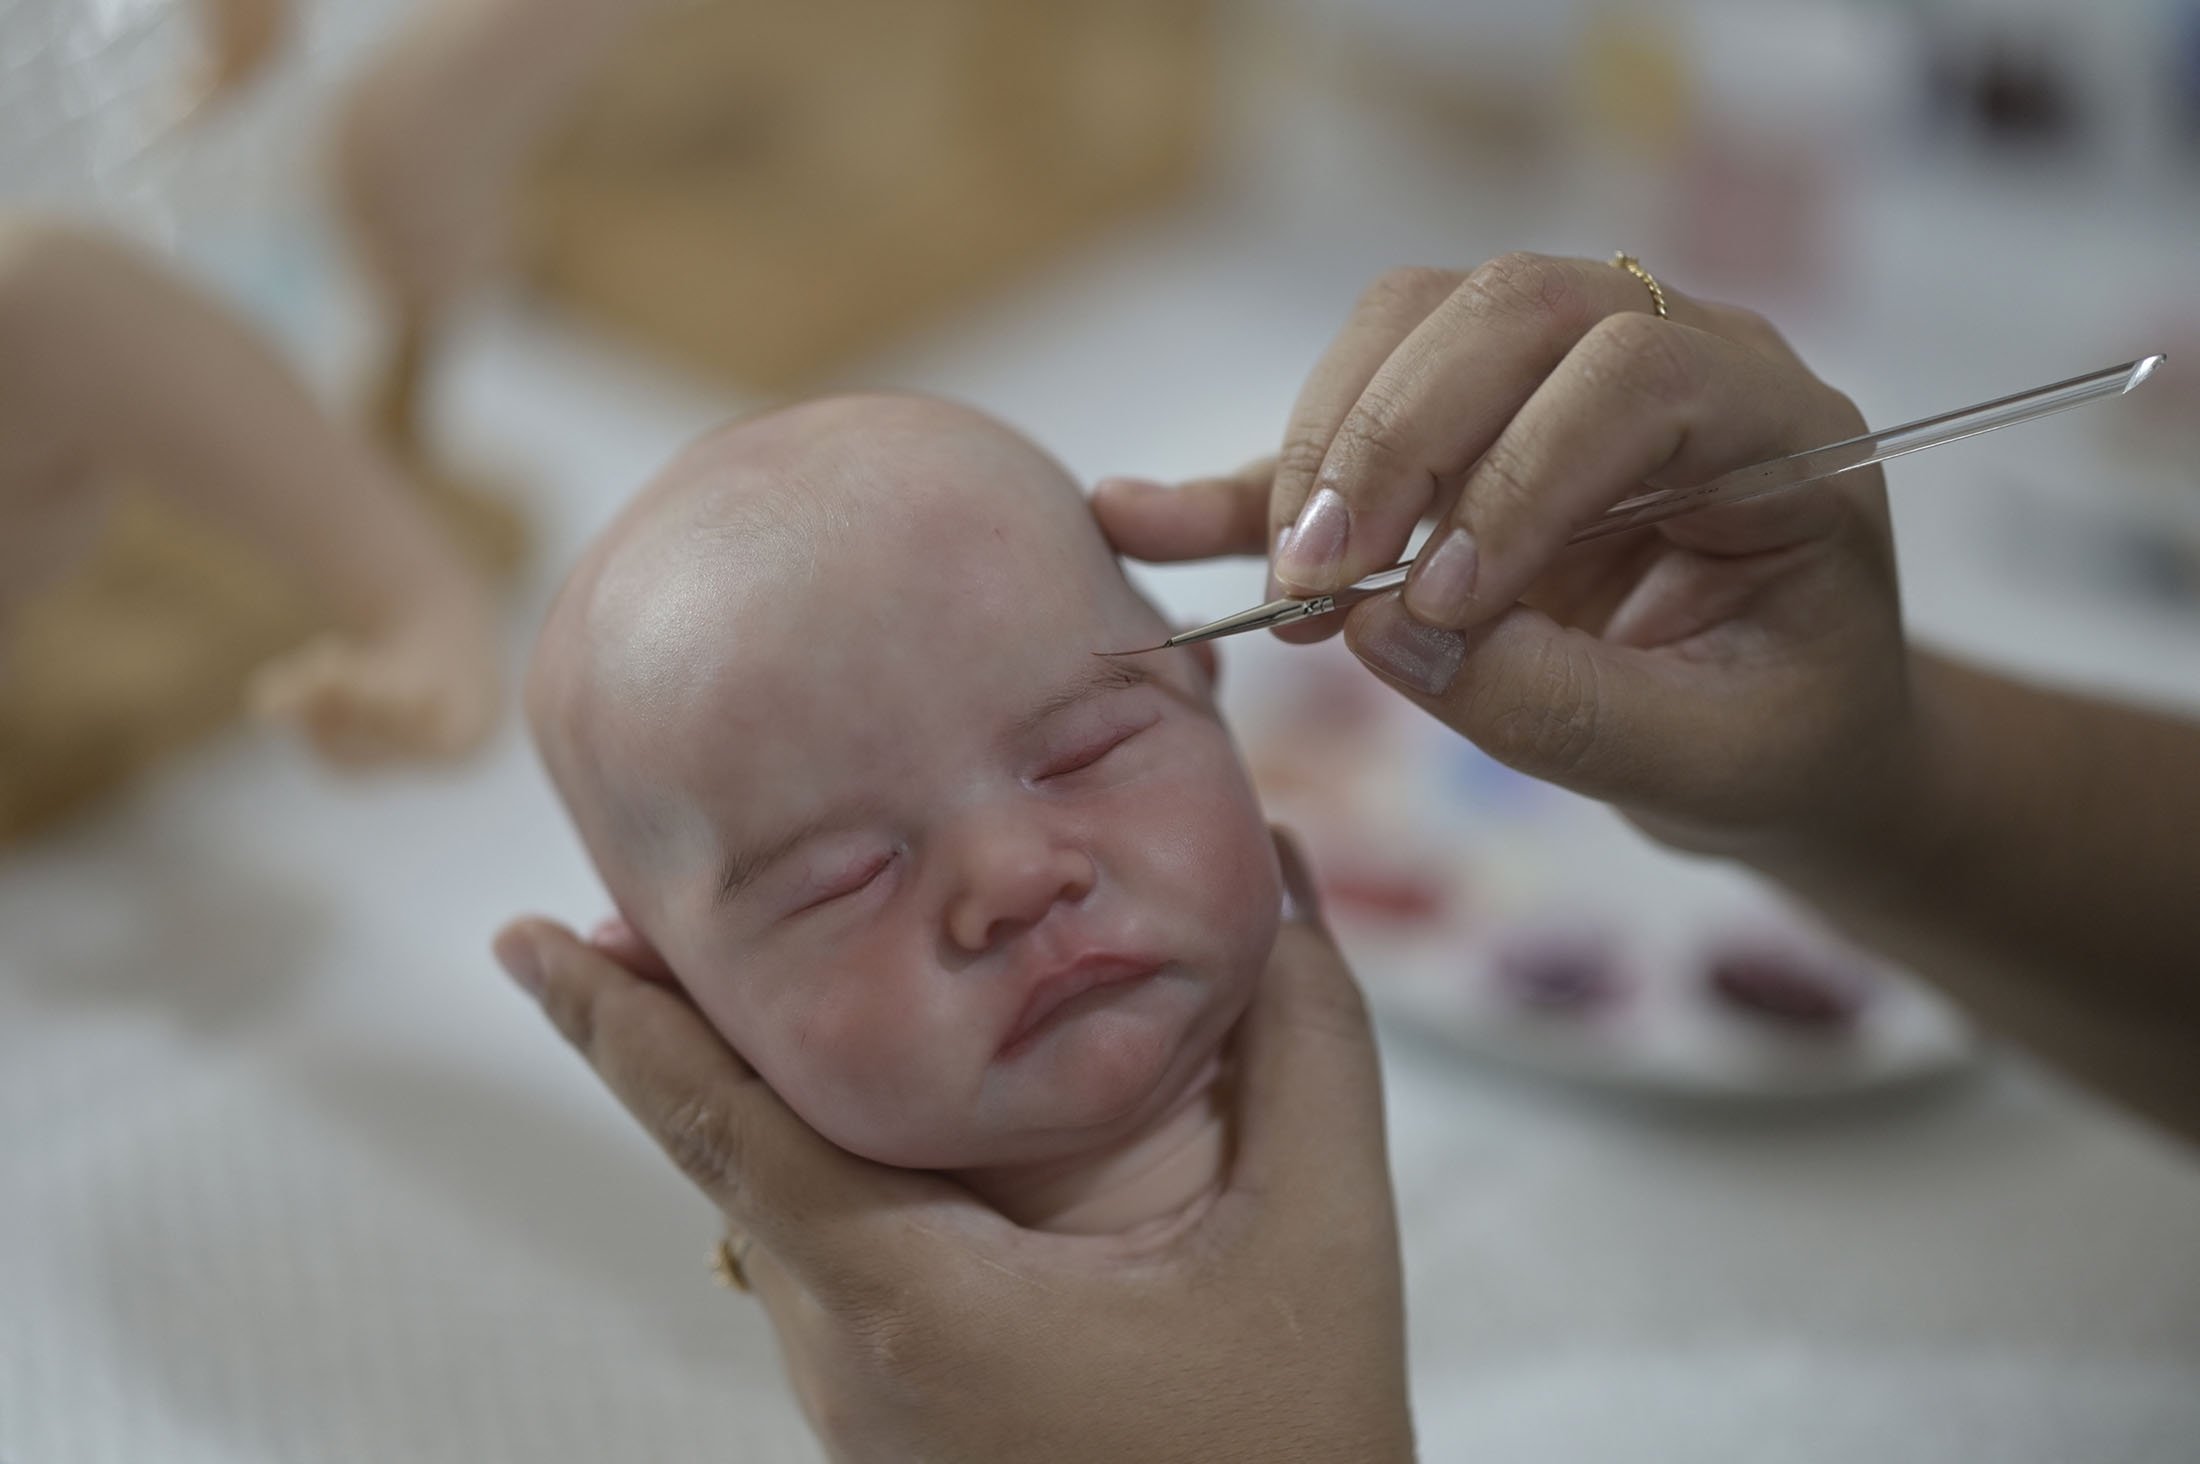 Reborn Babies: Silent bundles of joy